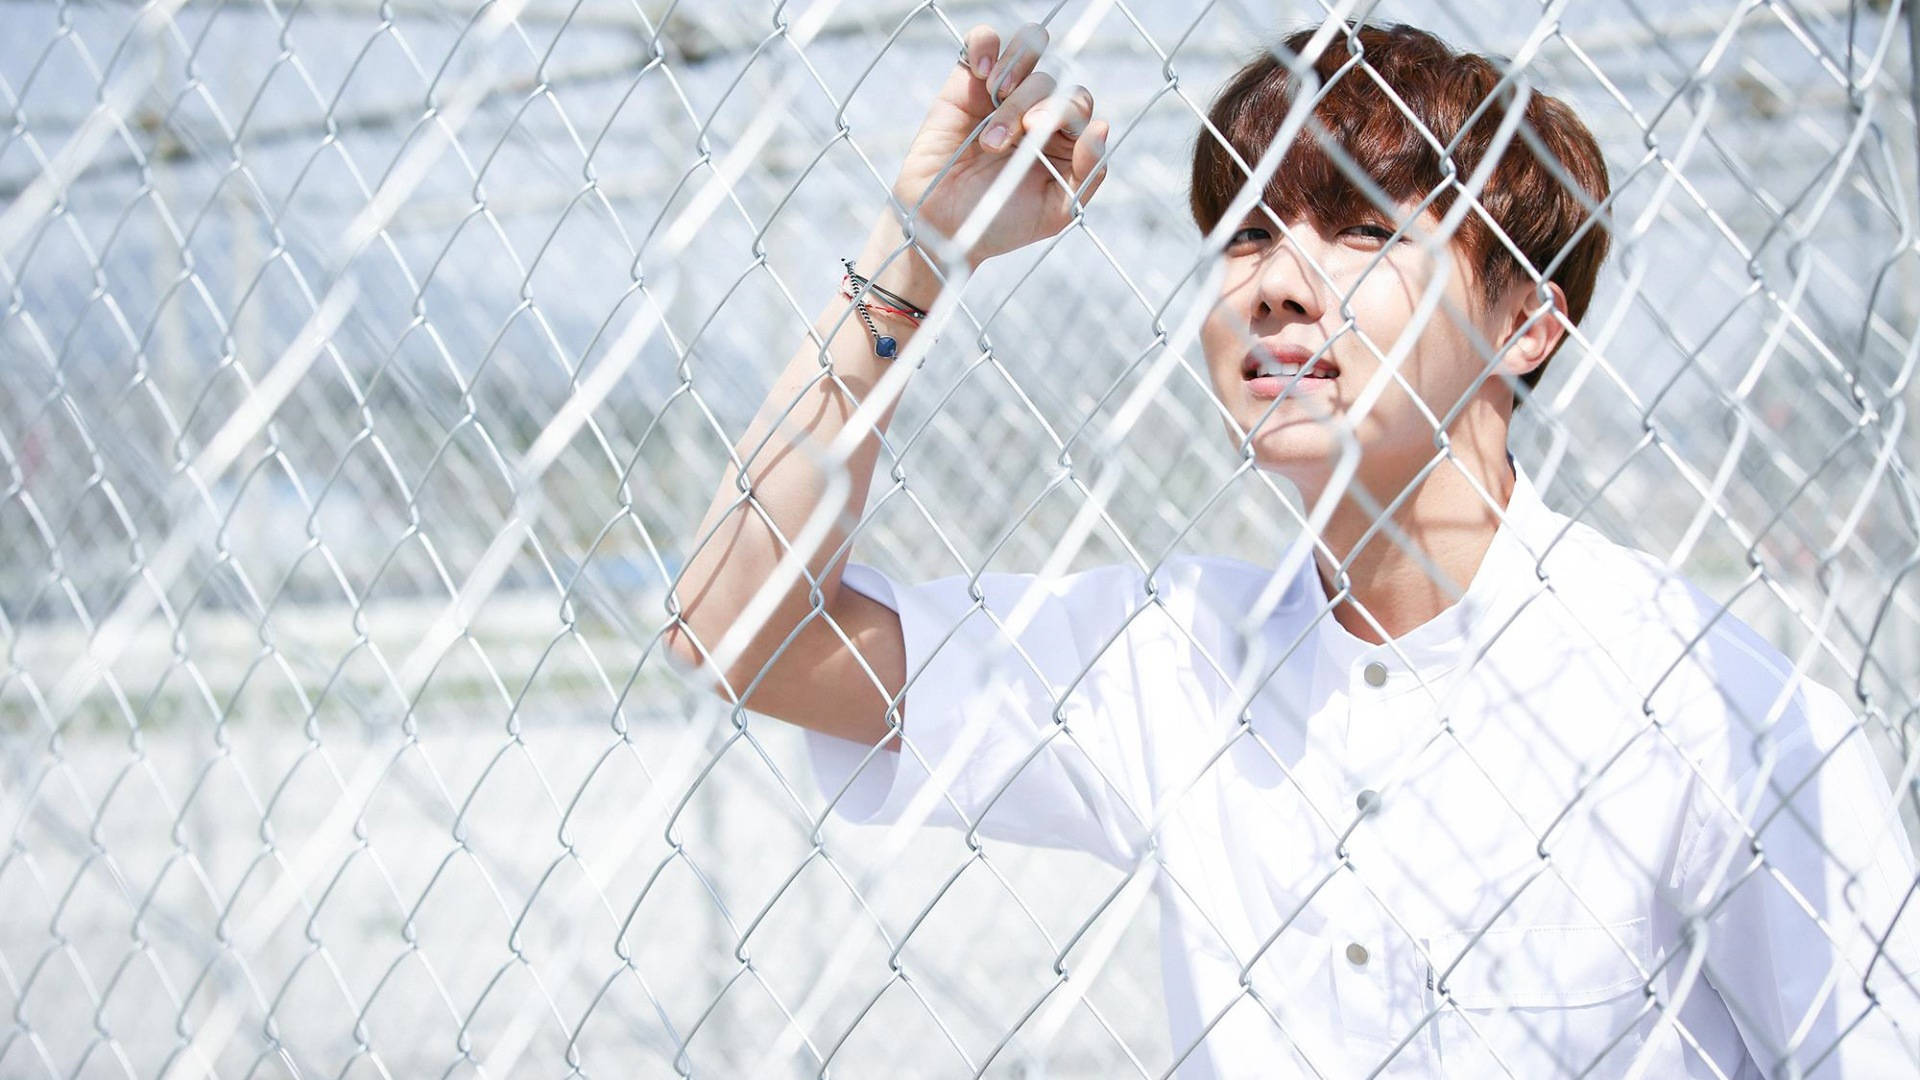 J-hope Holding On A Fence Background